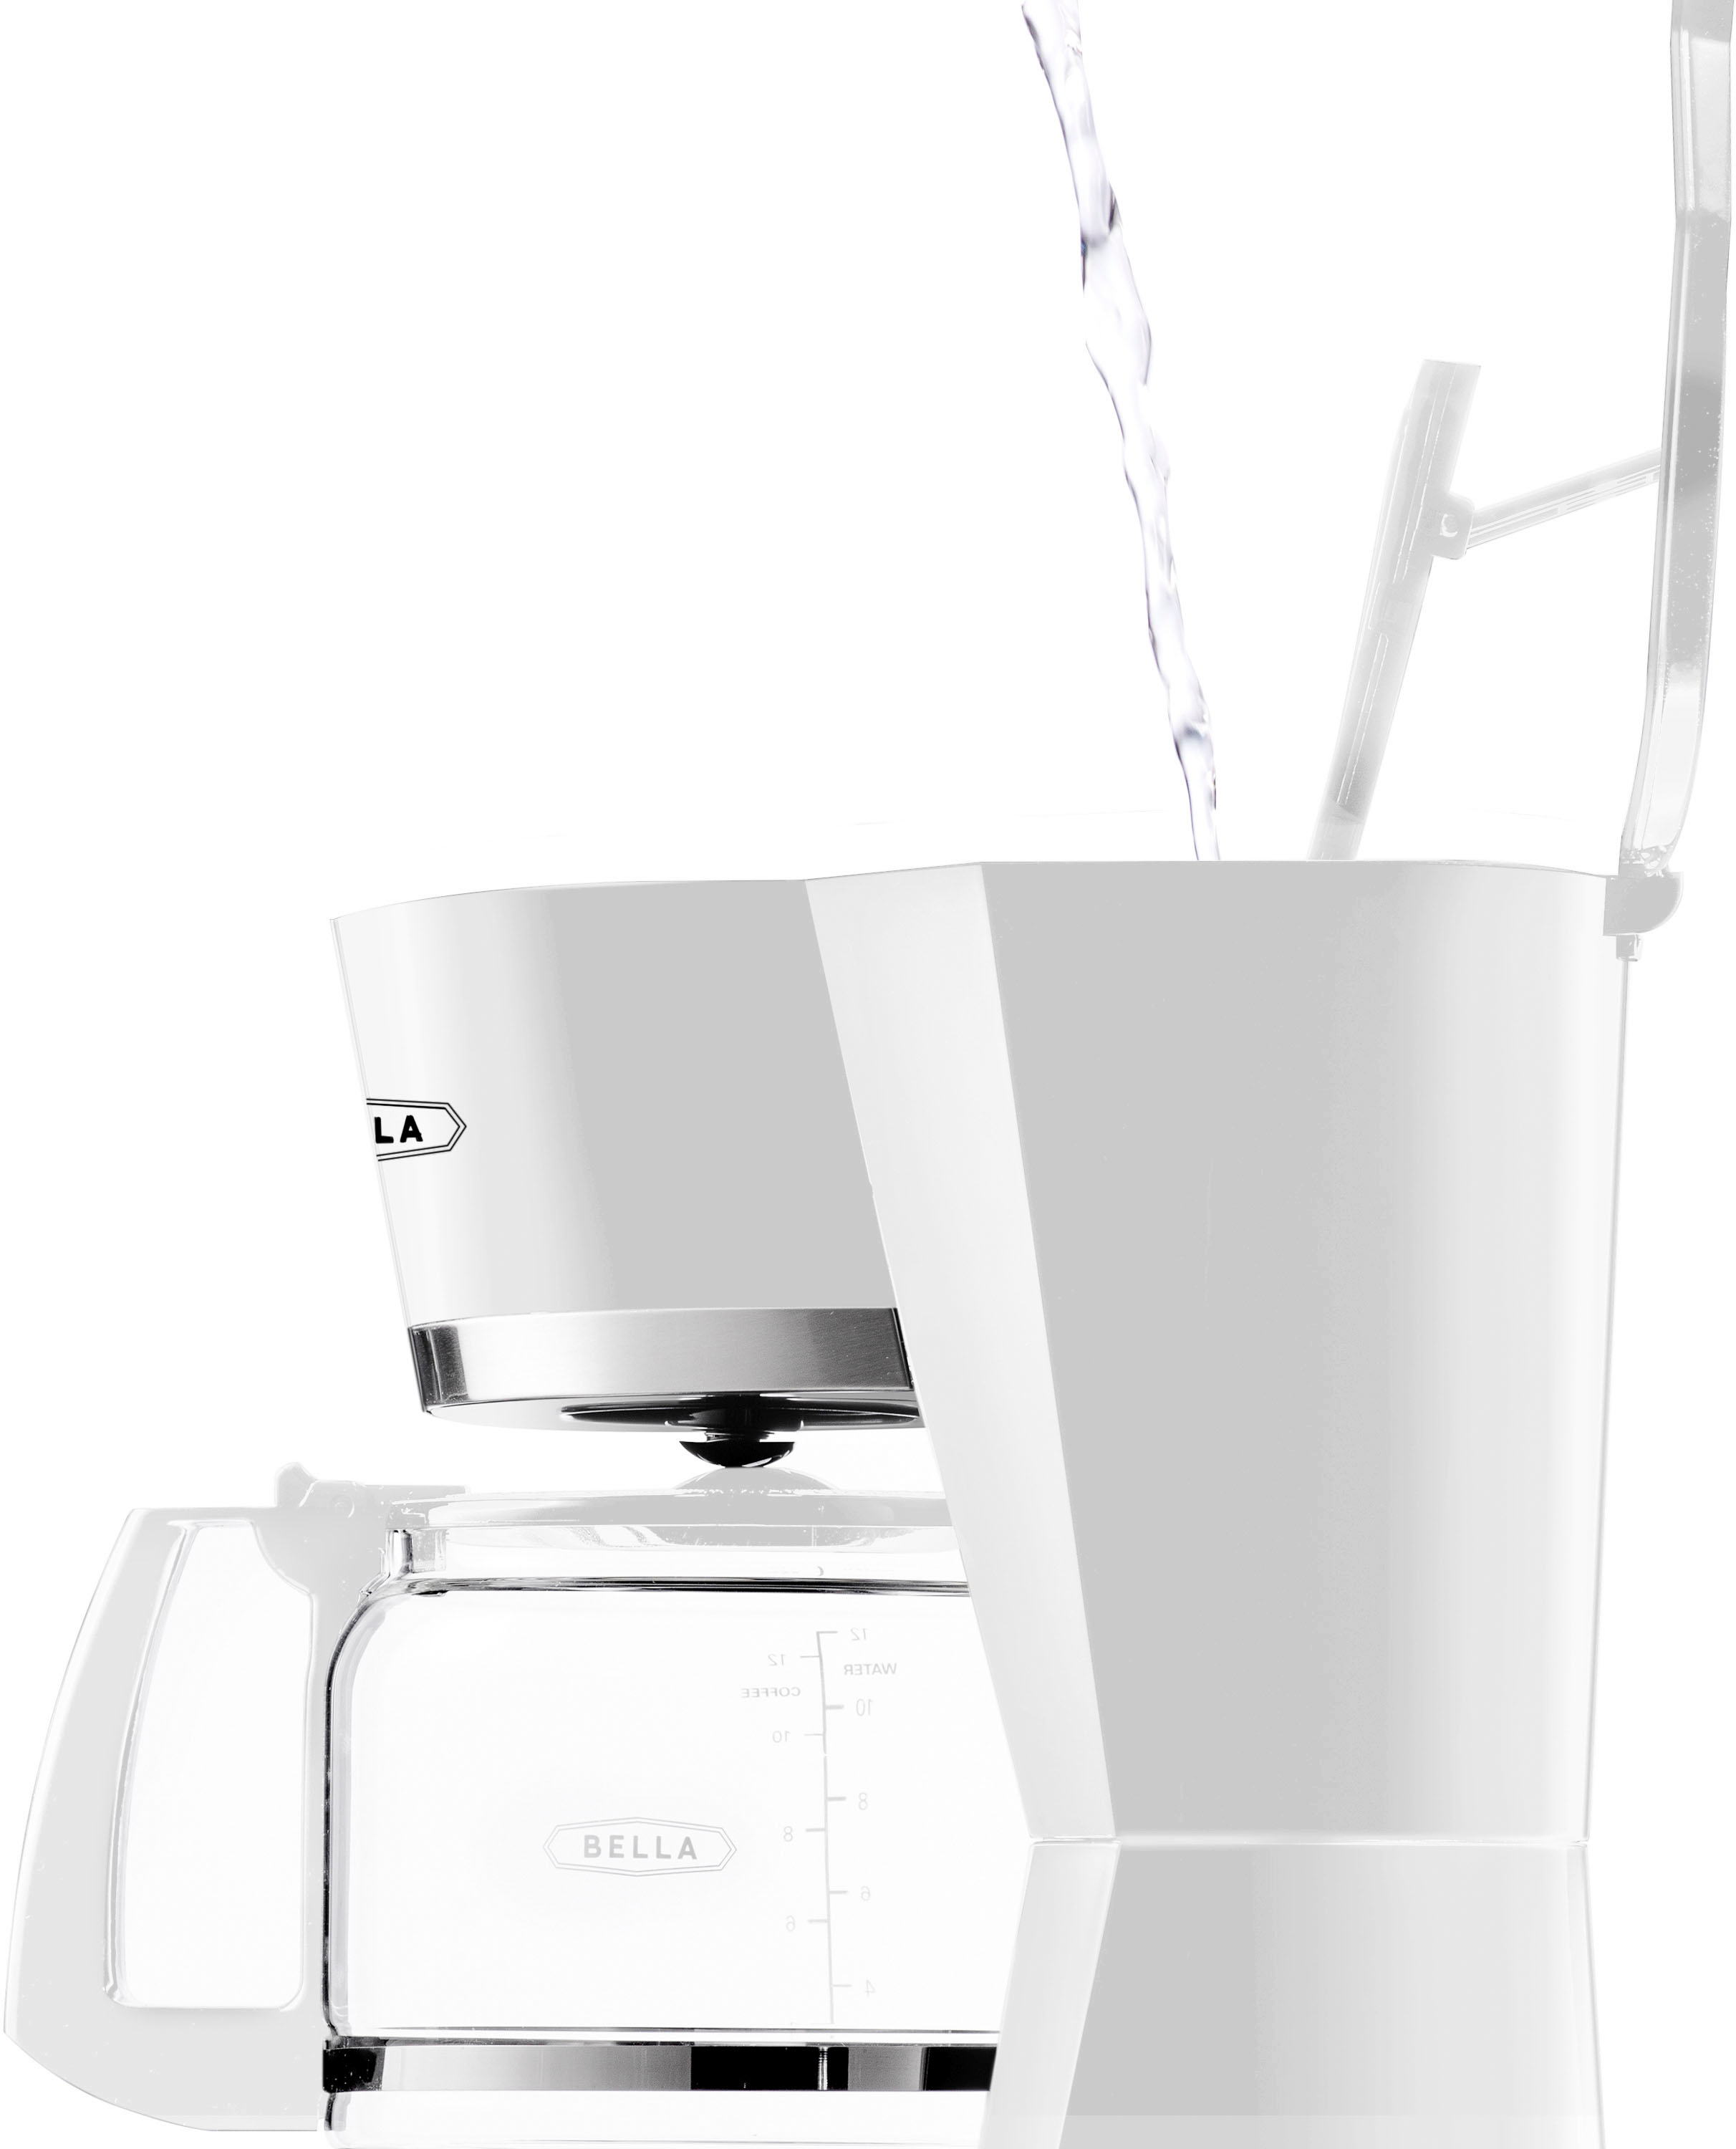 Best Buy: Bella Pro Series 18-Cup Programmable Coffee Maker